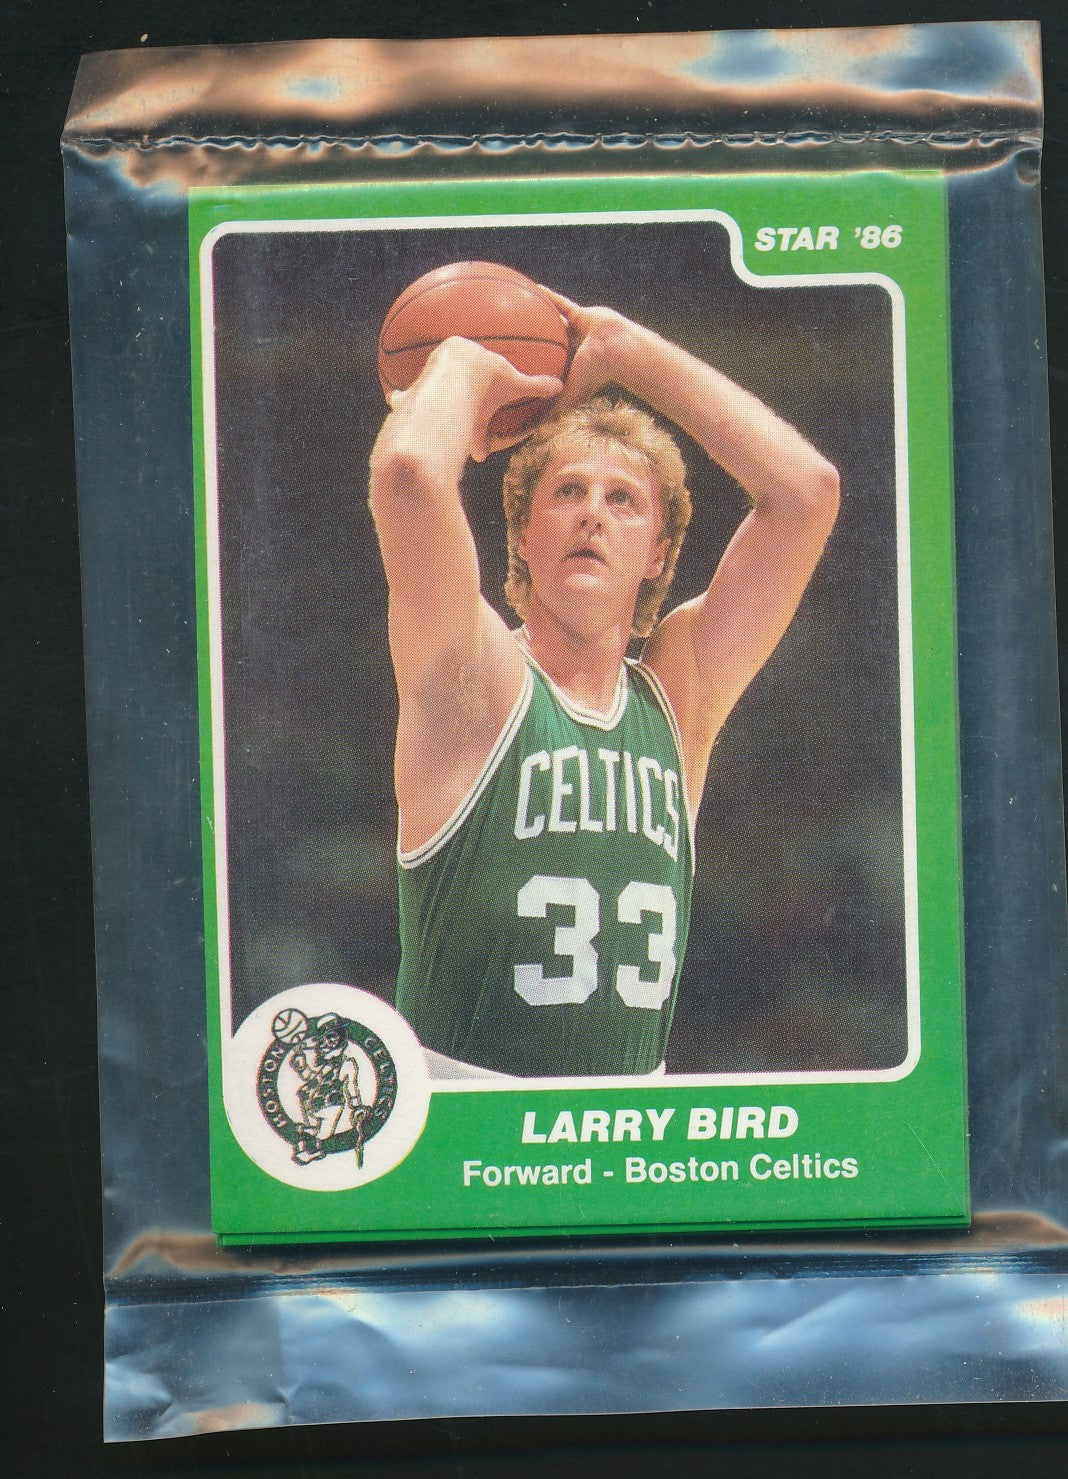 1985/86 Star Basketball Celtics Bagged Set (Green Version)